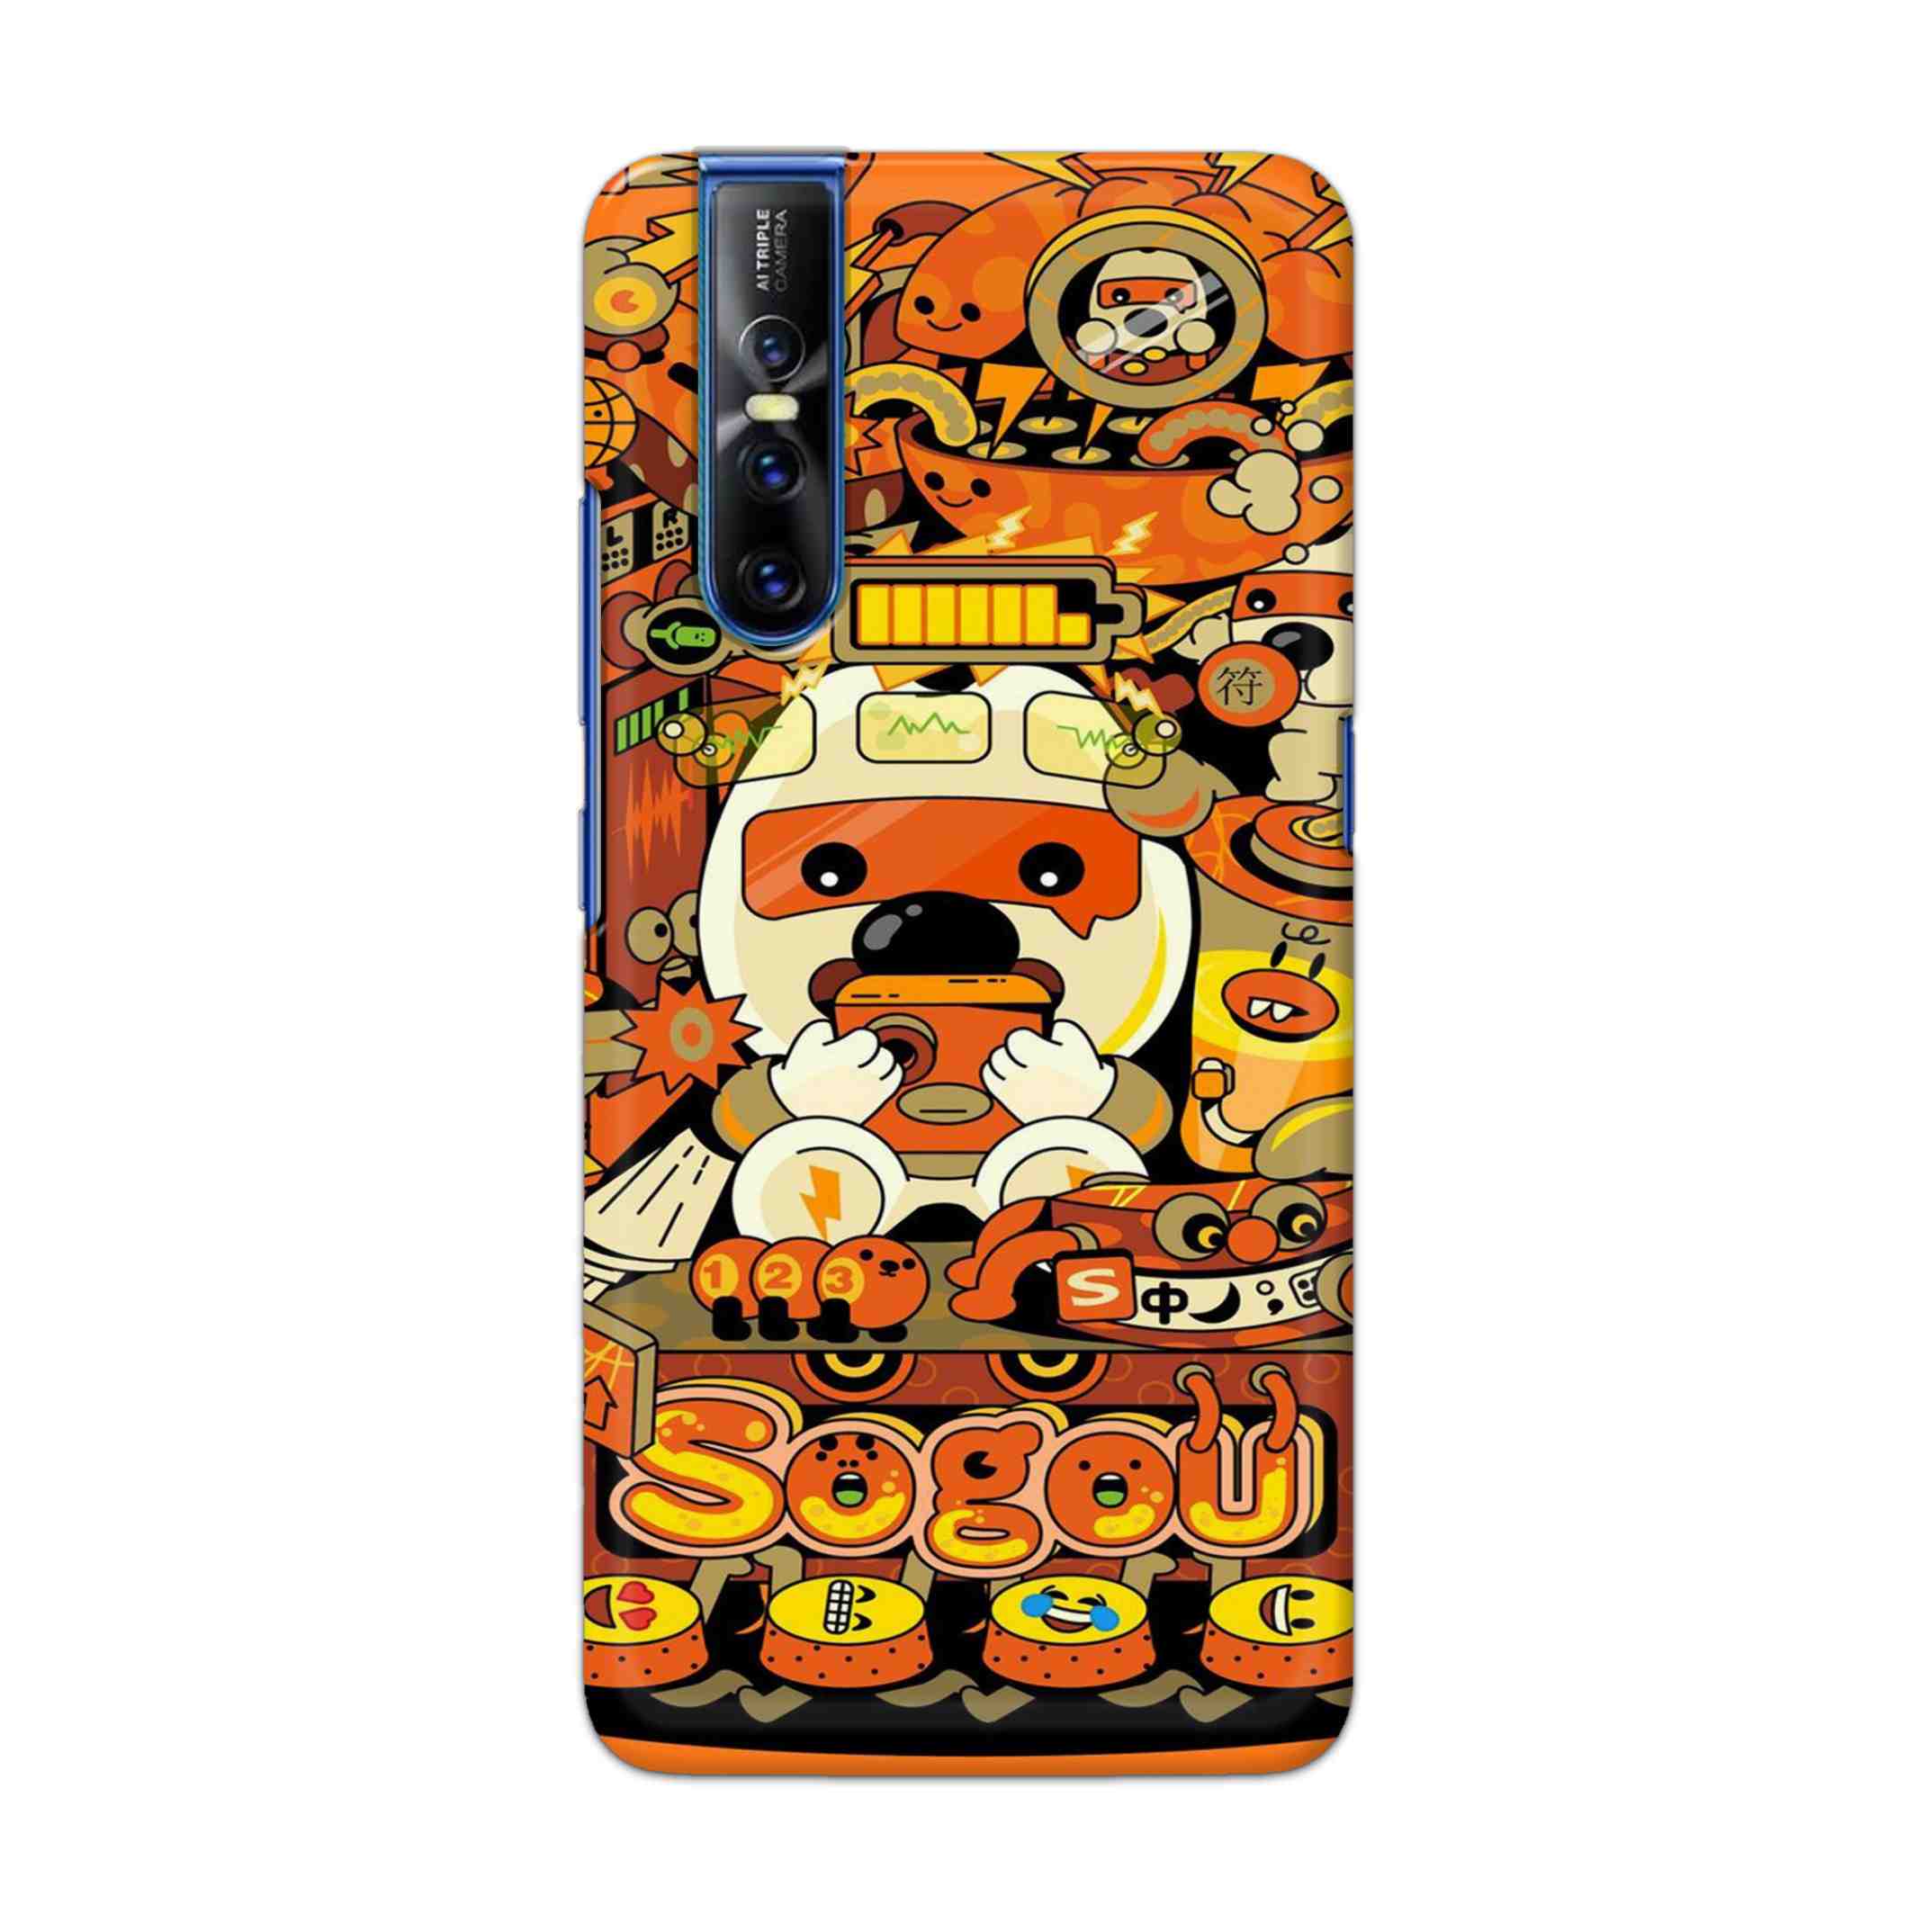 Buy Sogou Hard Back Mobile Phone Case Cover For Vivo V15 Pro Online